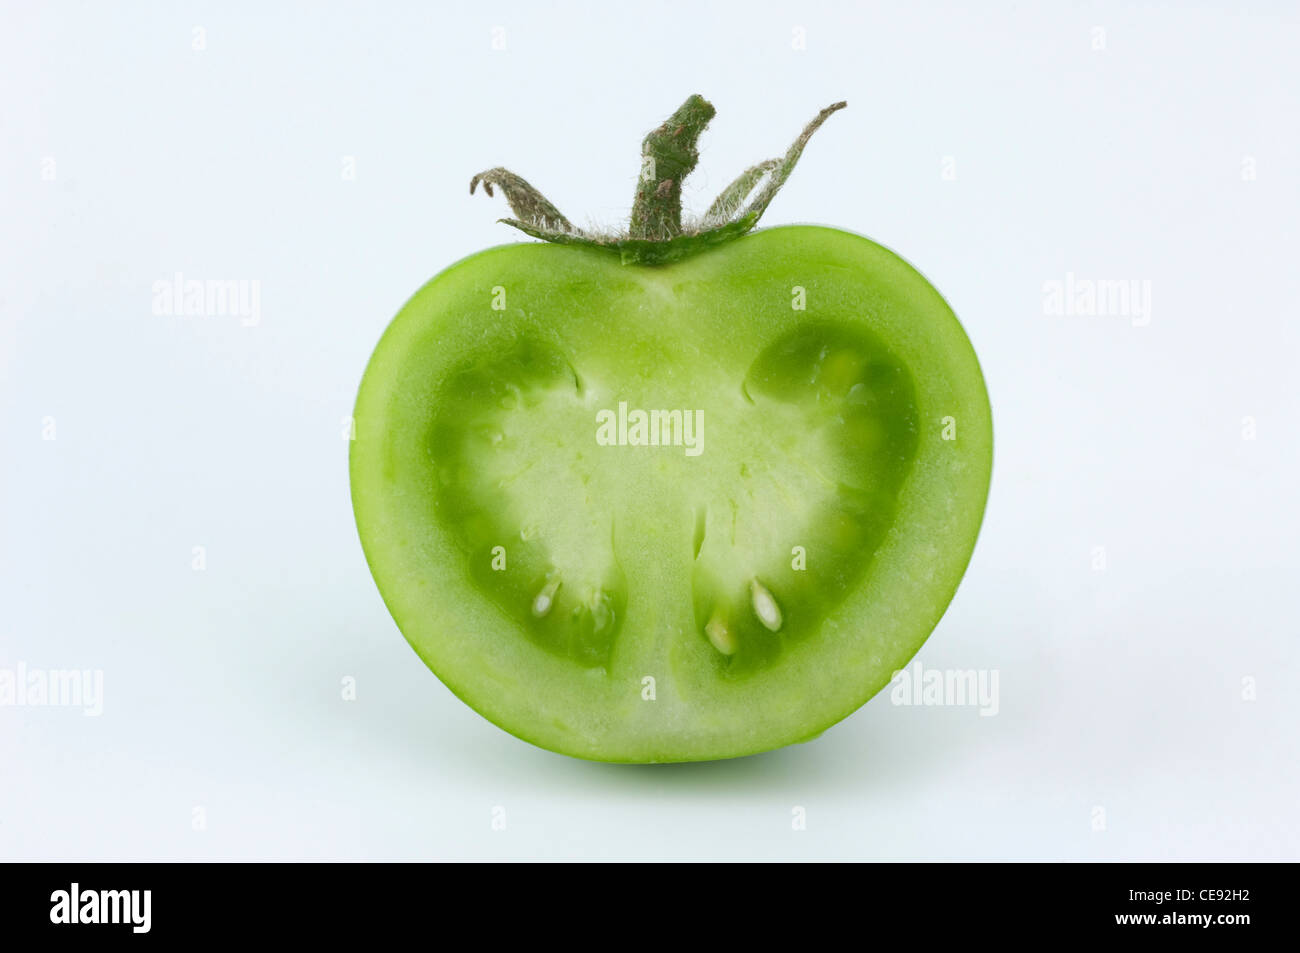 Tomato (Lycopersicon esculentum), halved green fruit. Studio picture against a white background. Stock Photo